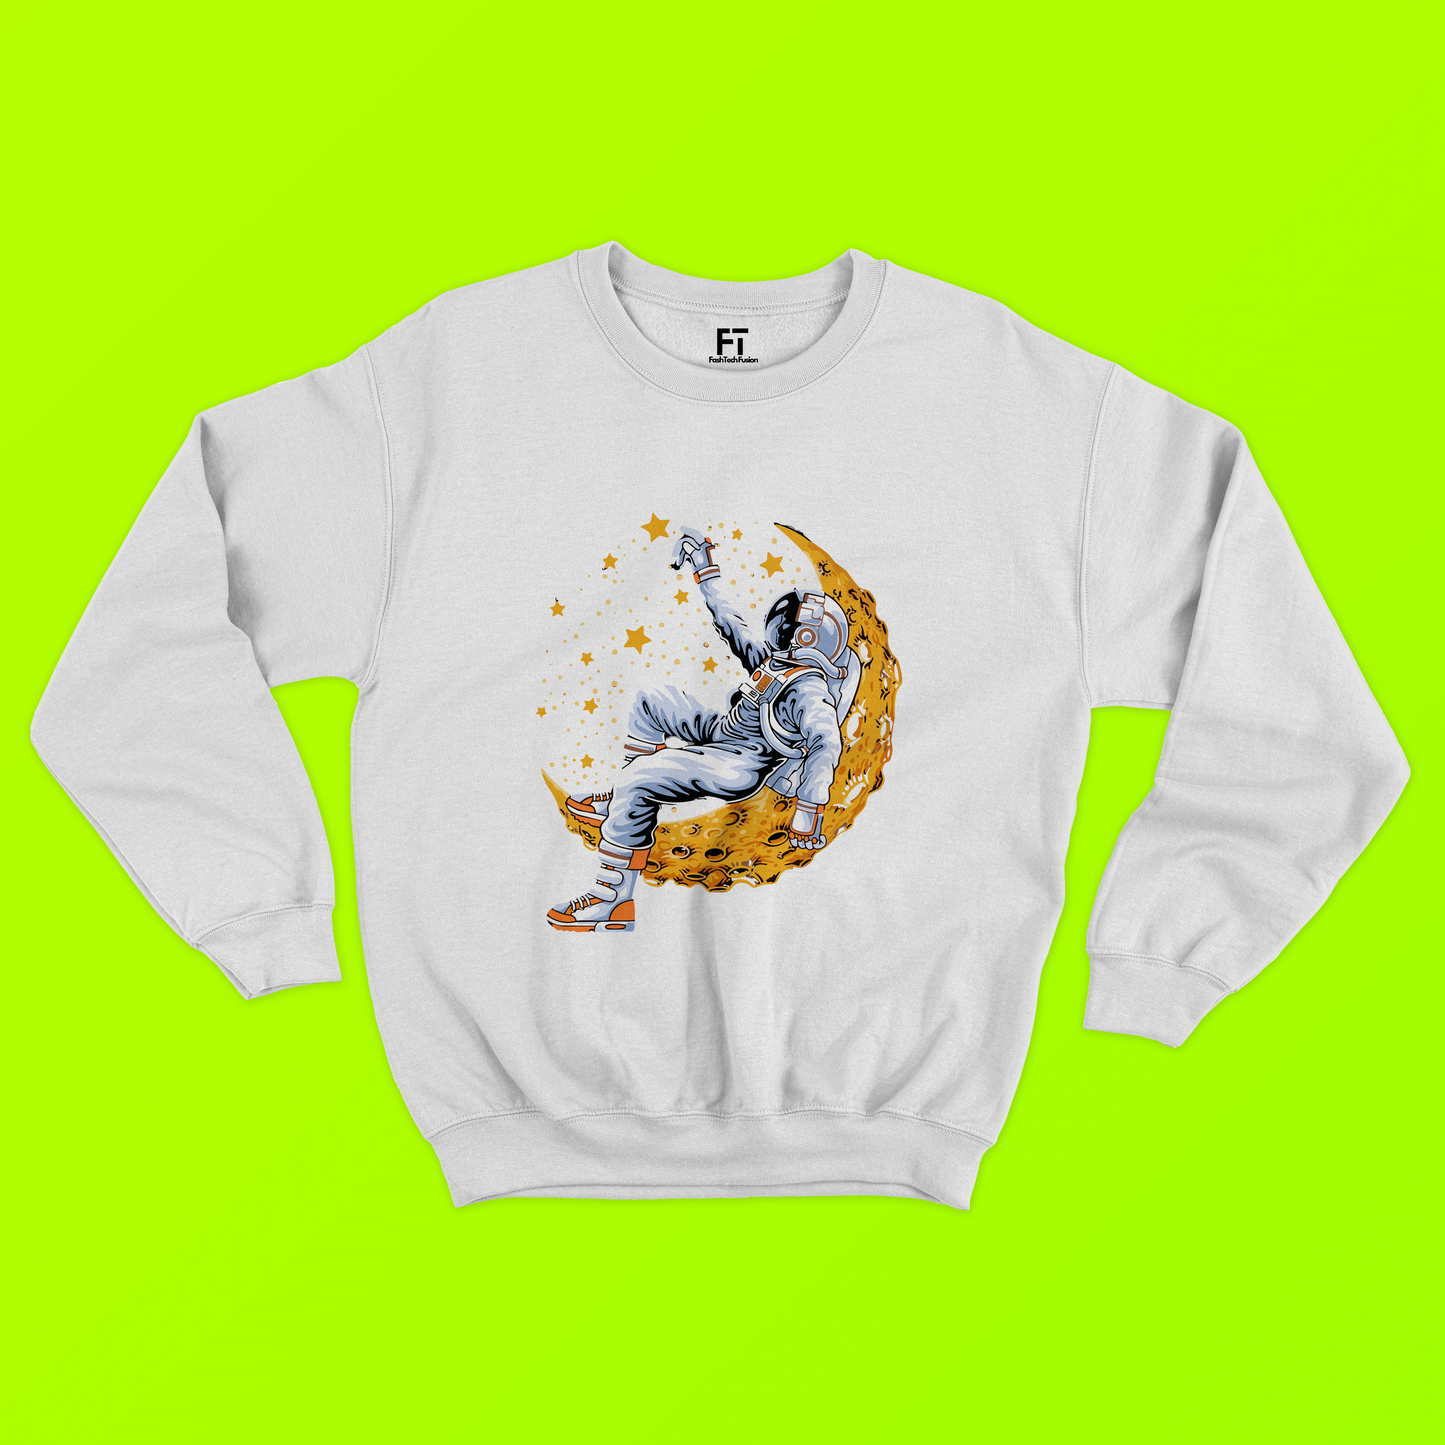 Astro Moon Sweatshirt